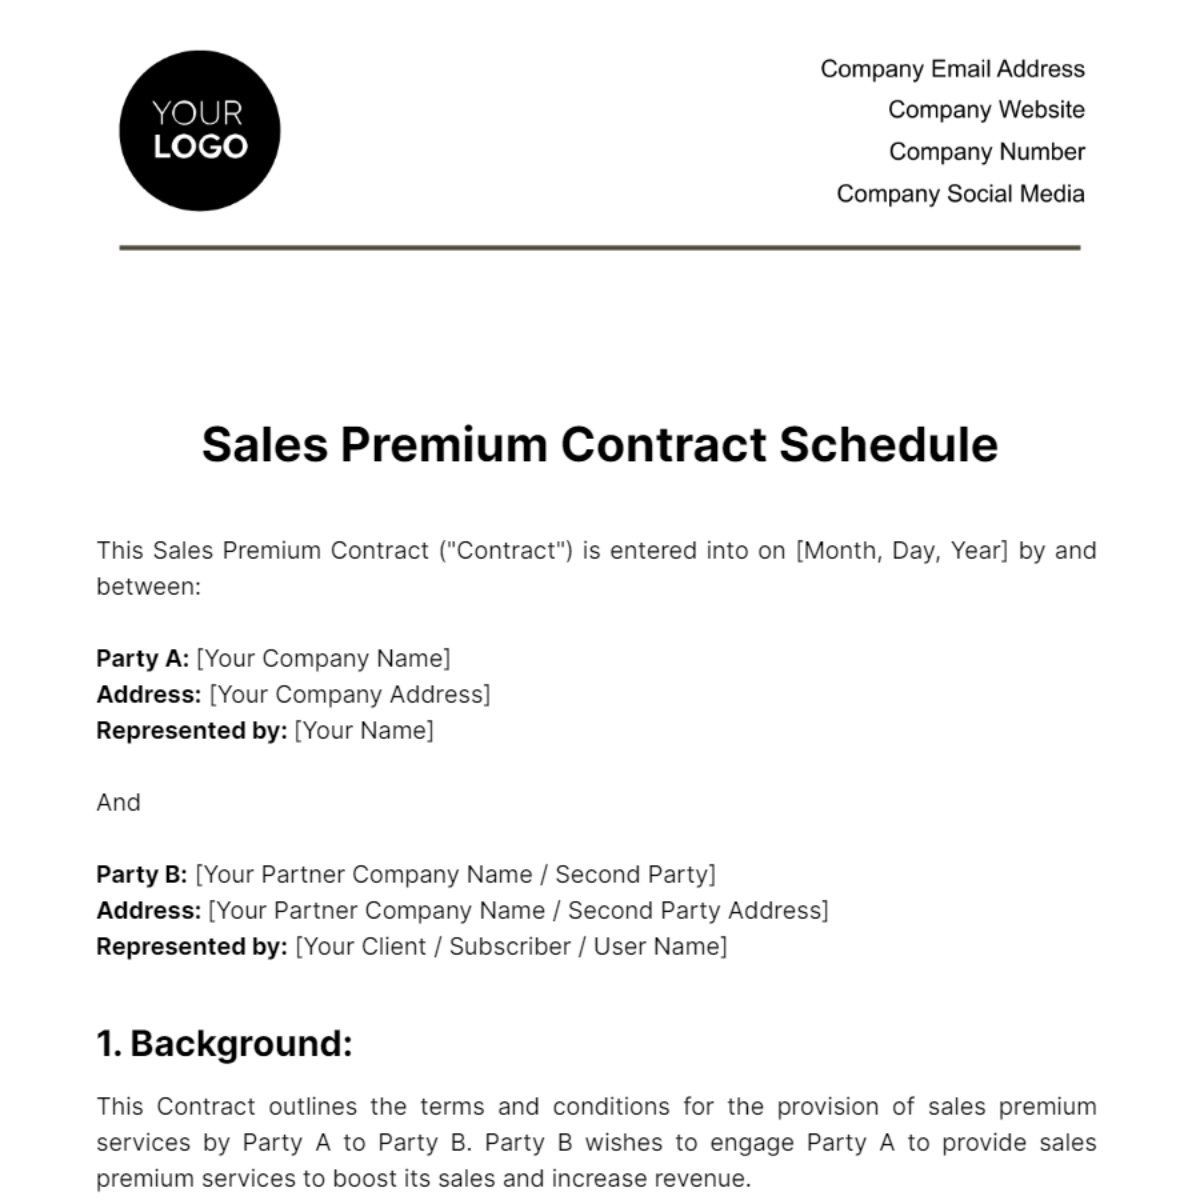 Free Sales Premium Contract Schedule Template